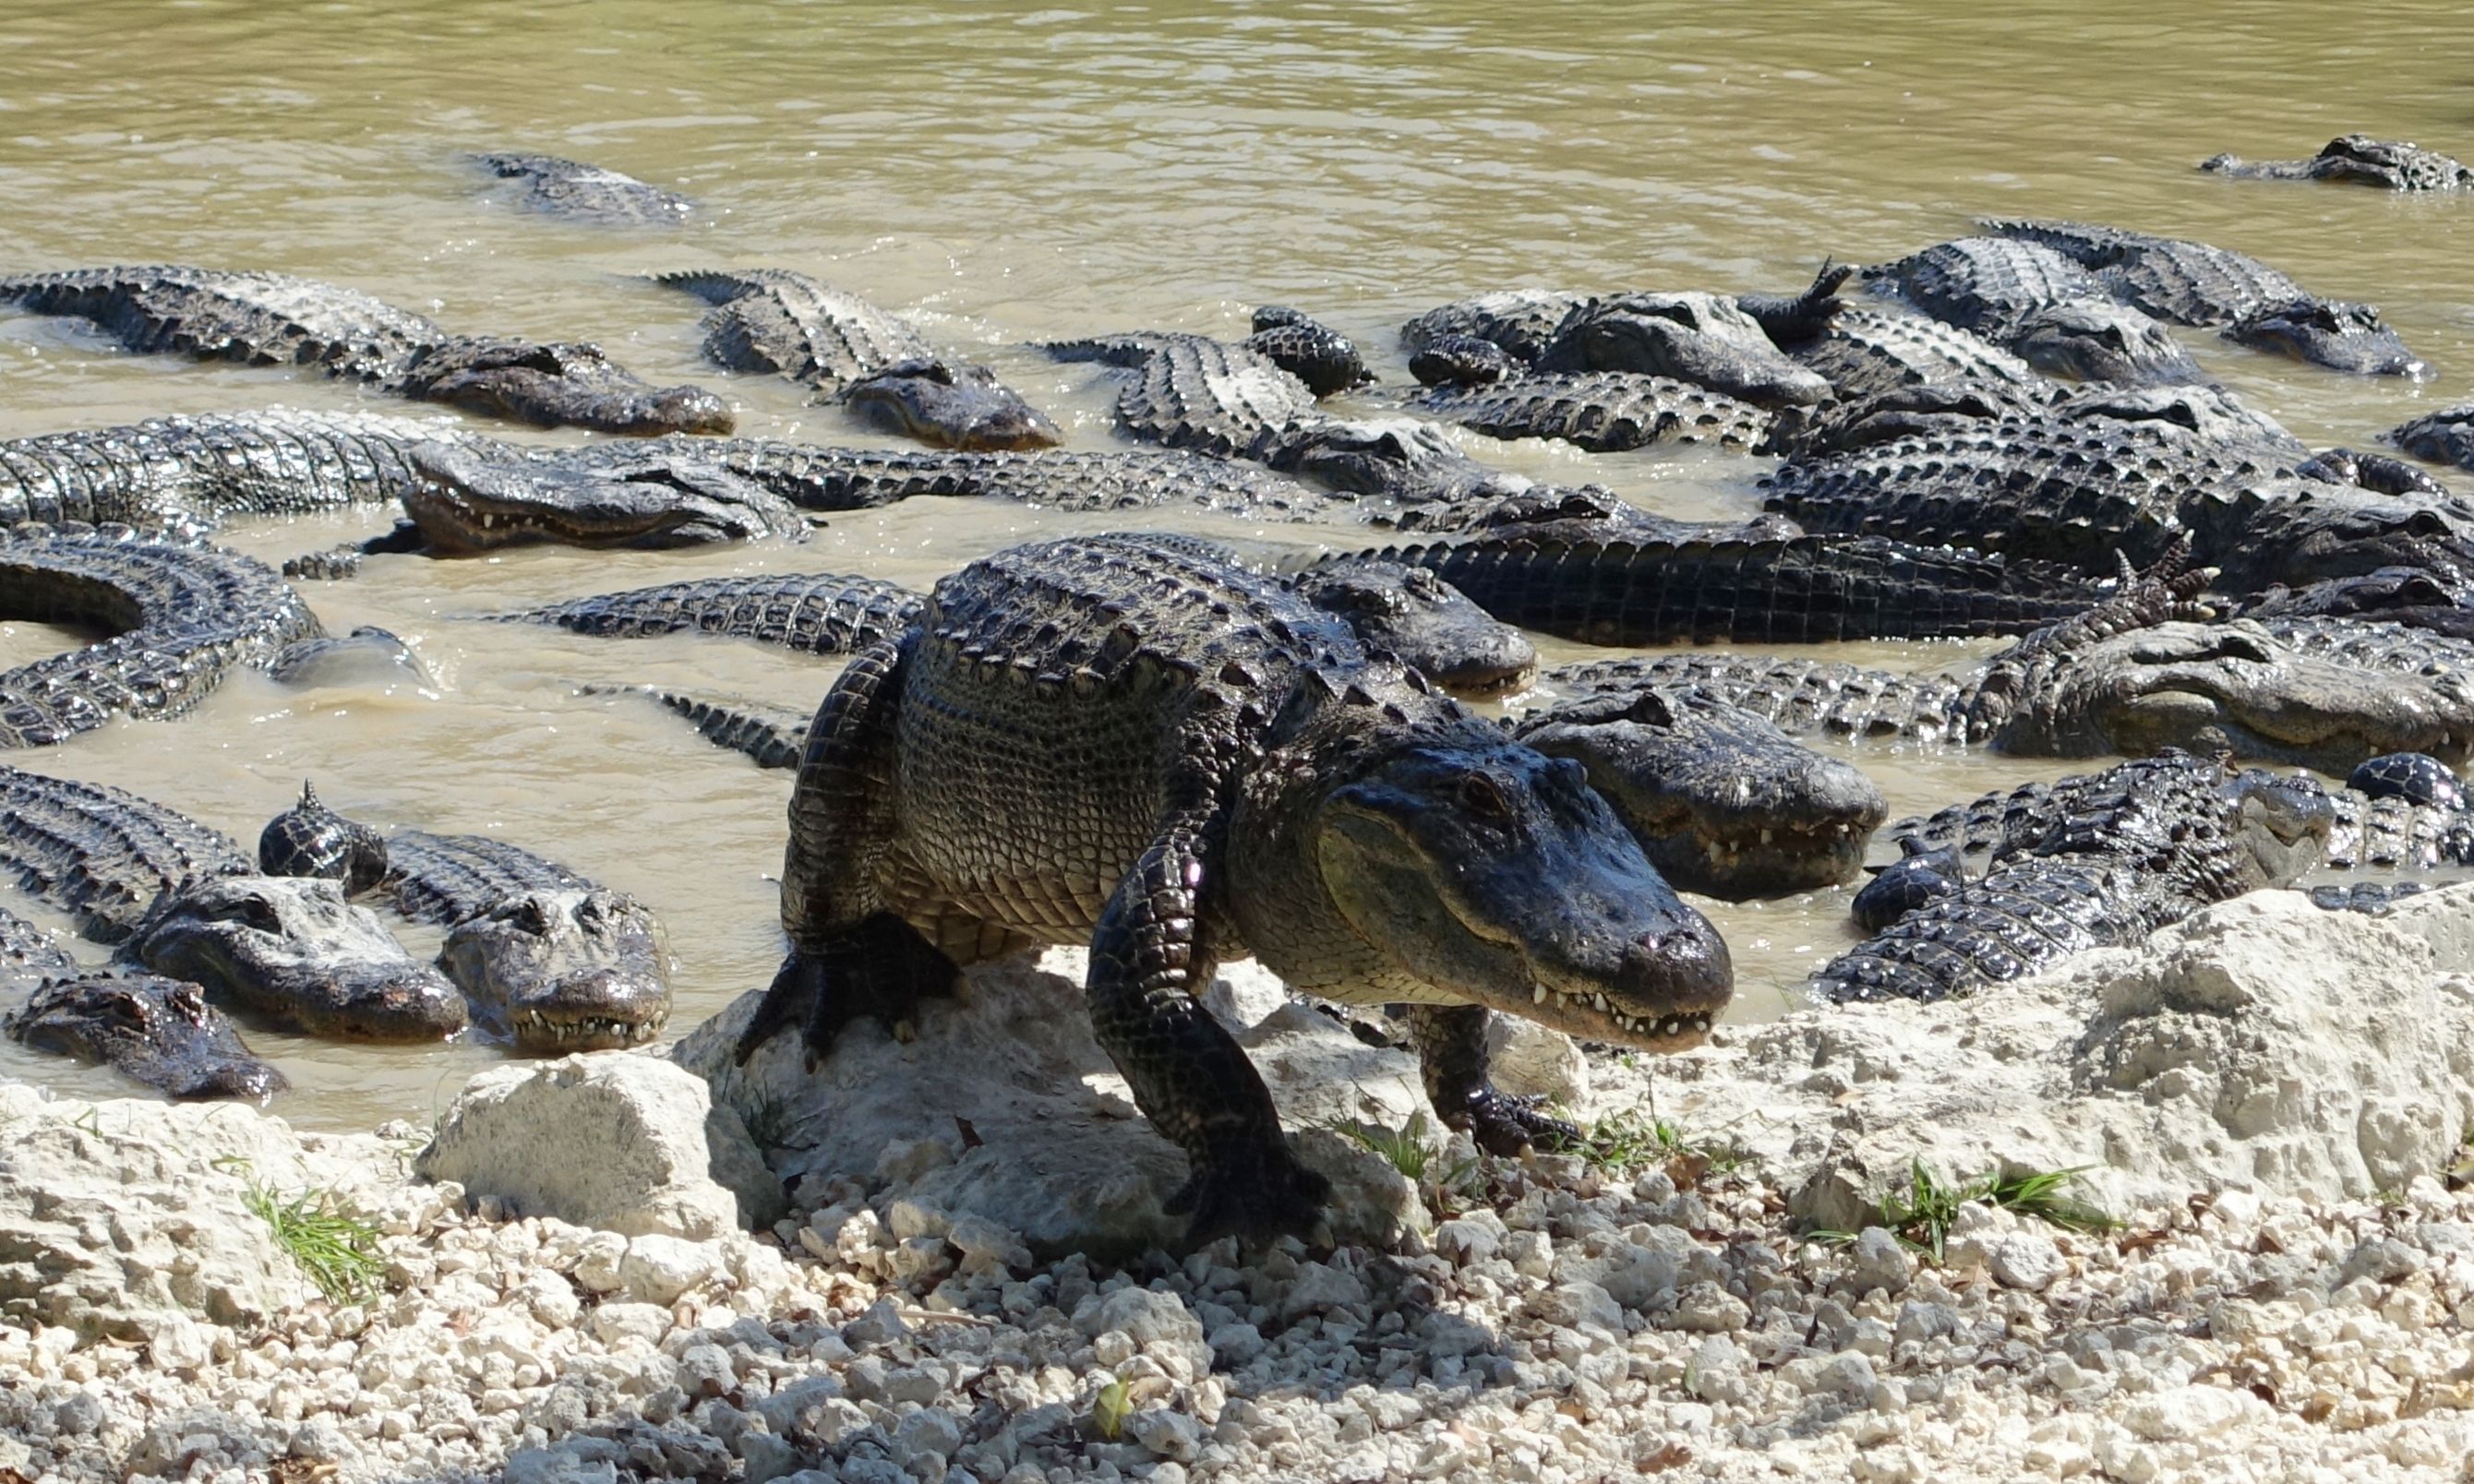 Everglades Alligator Farm History